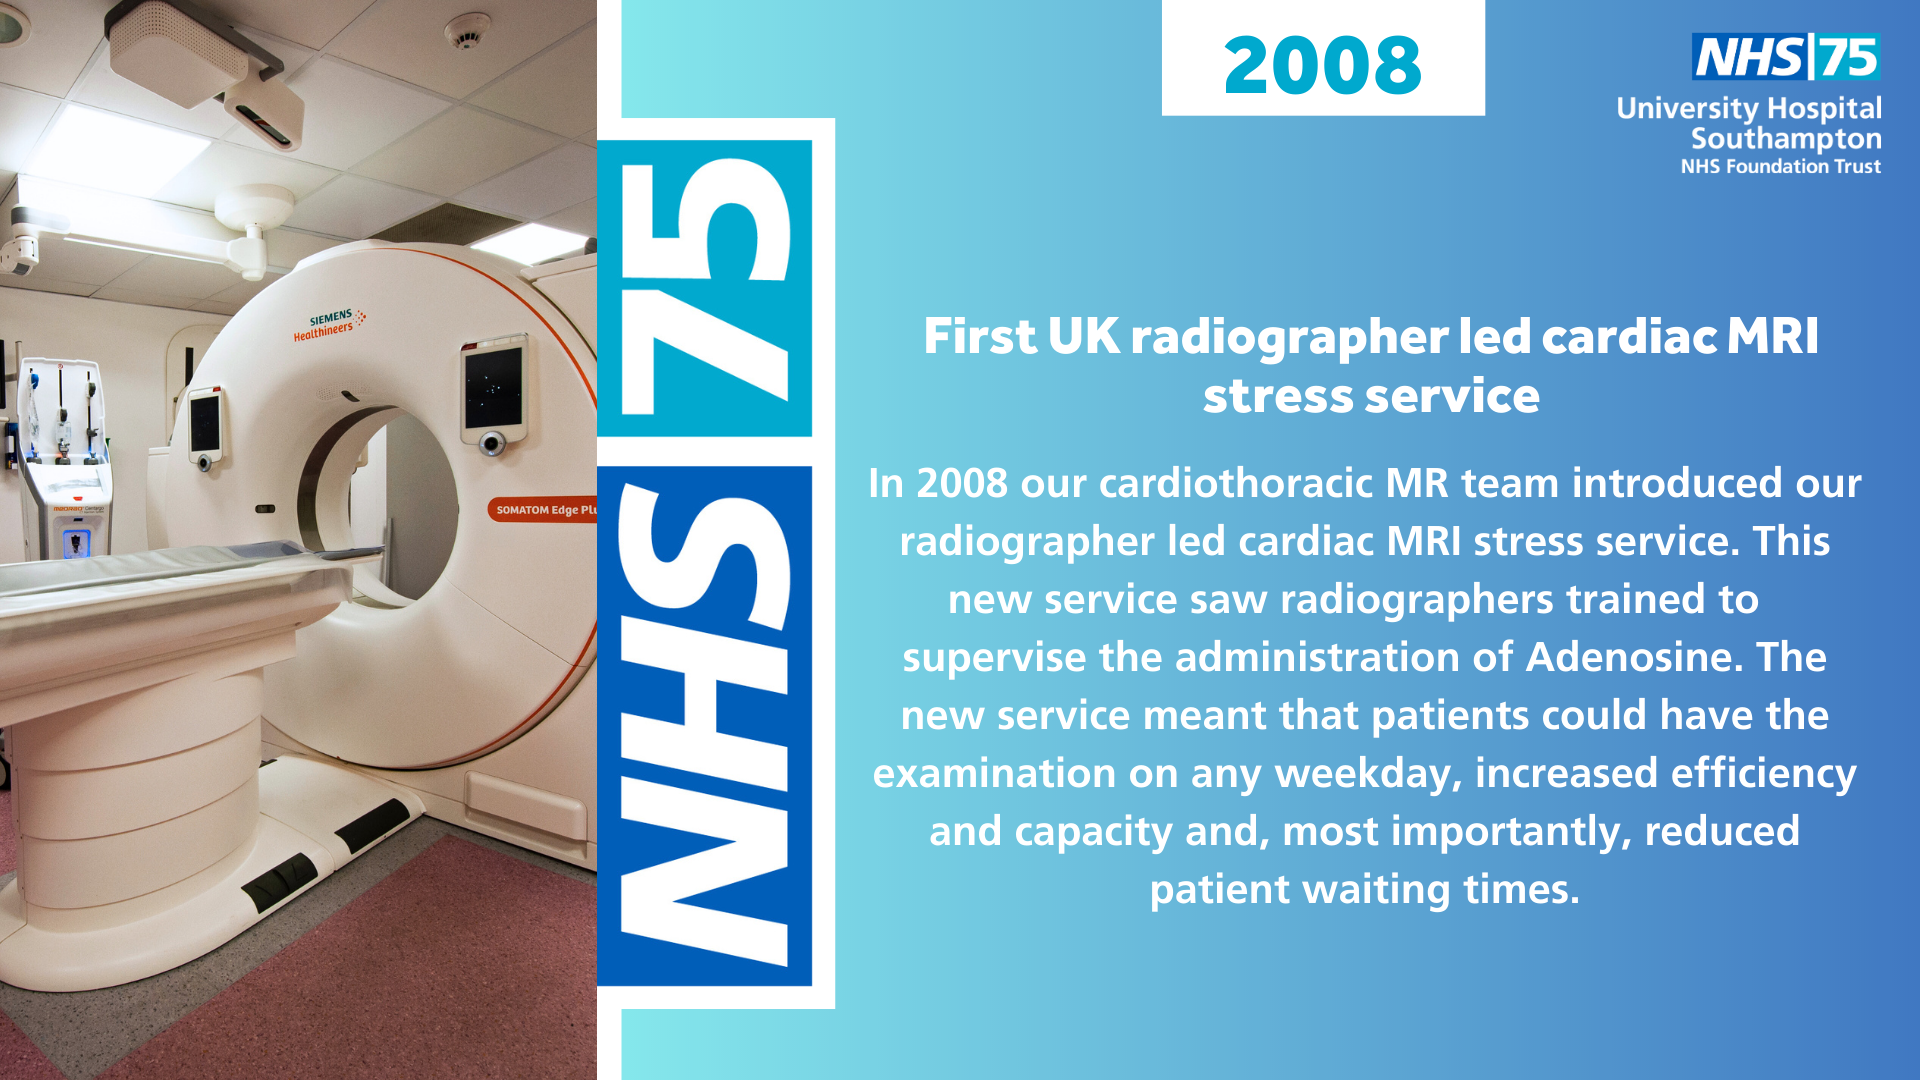 First UK radiographer led cardiac MRI stress service